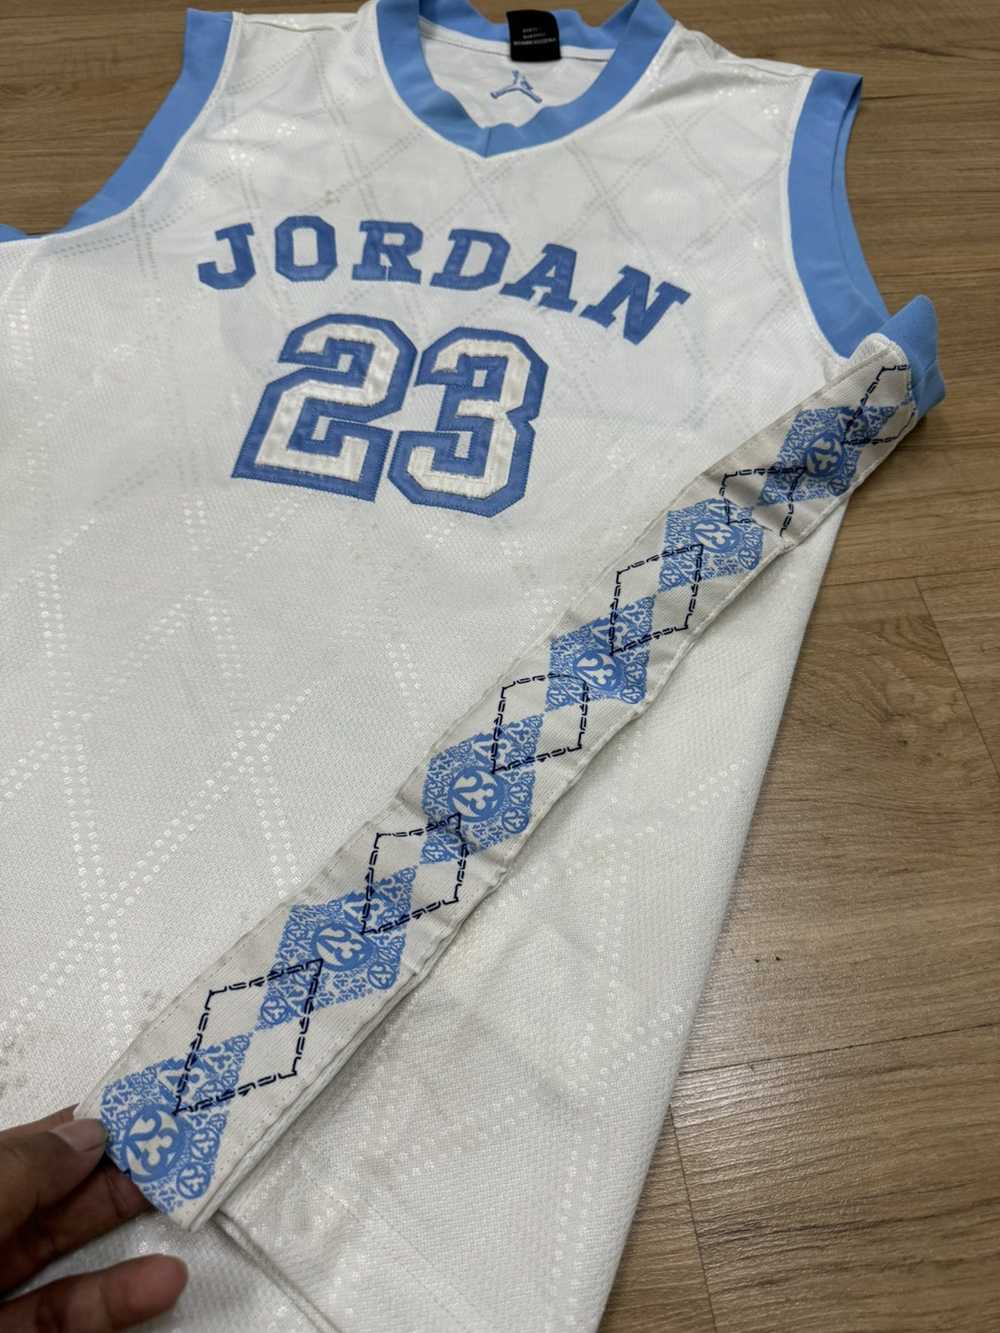 Jordan Brand Vintage Air Jordan 23 NBA Shirt - image 2